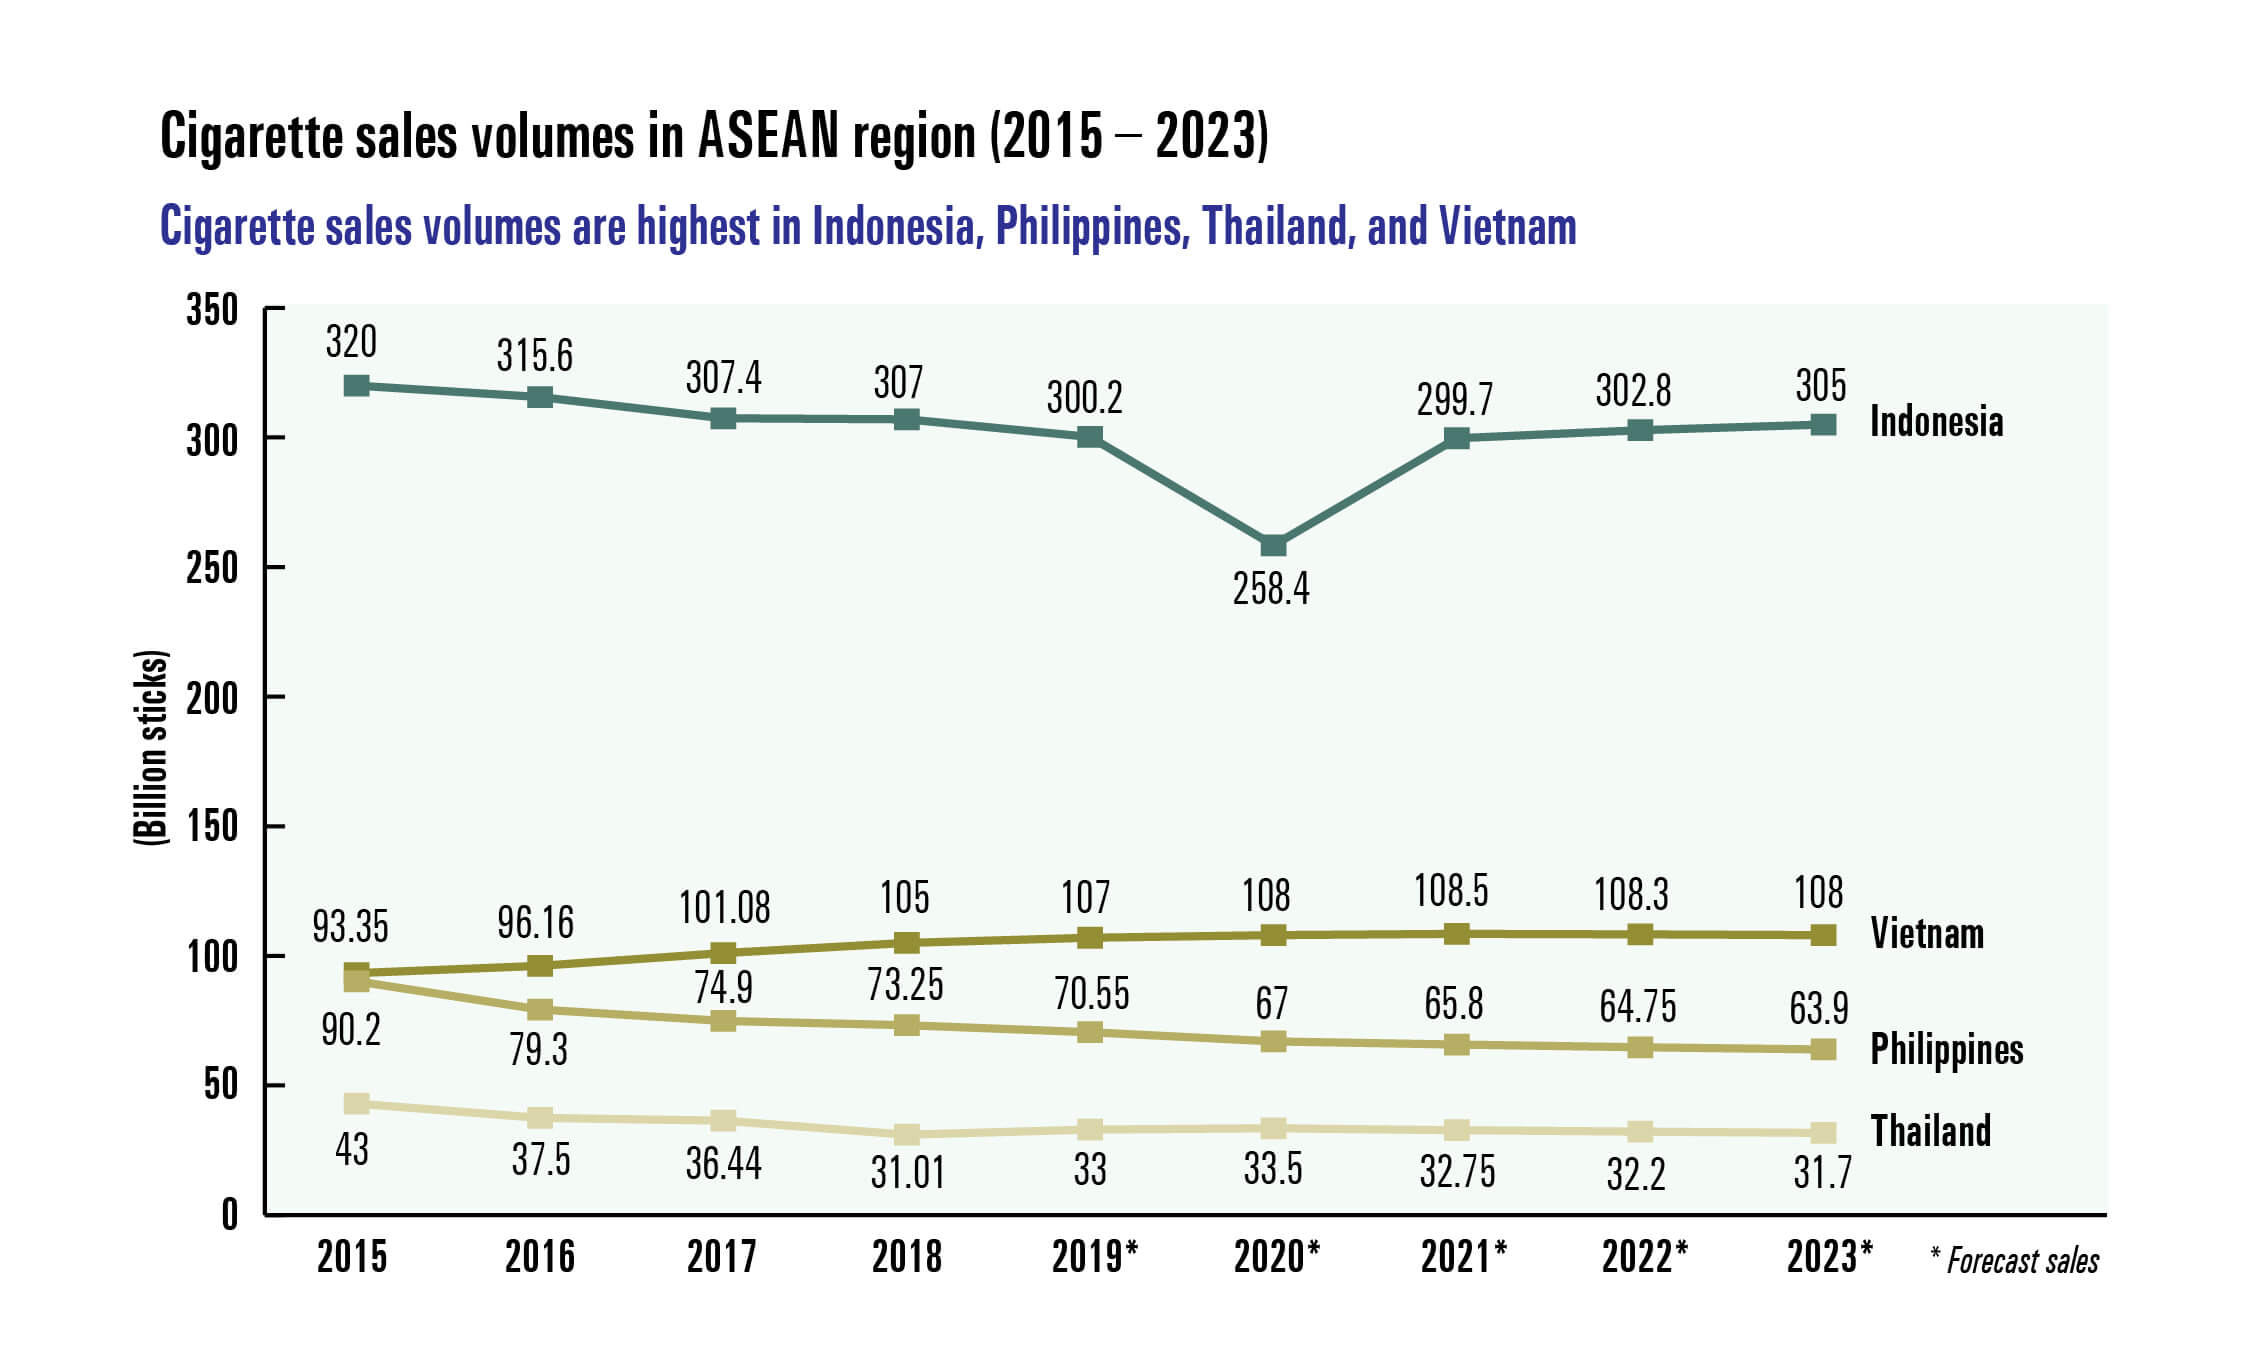 Cigarette sales volumes in ASEAN region (2015 - 2023)